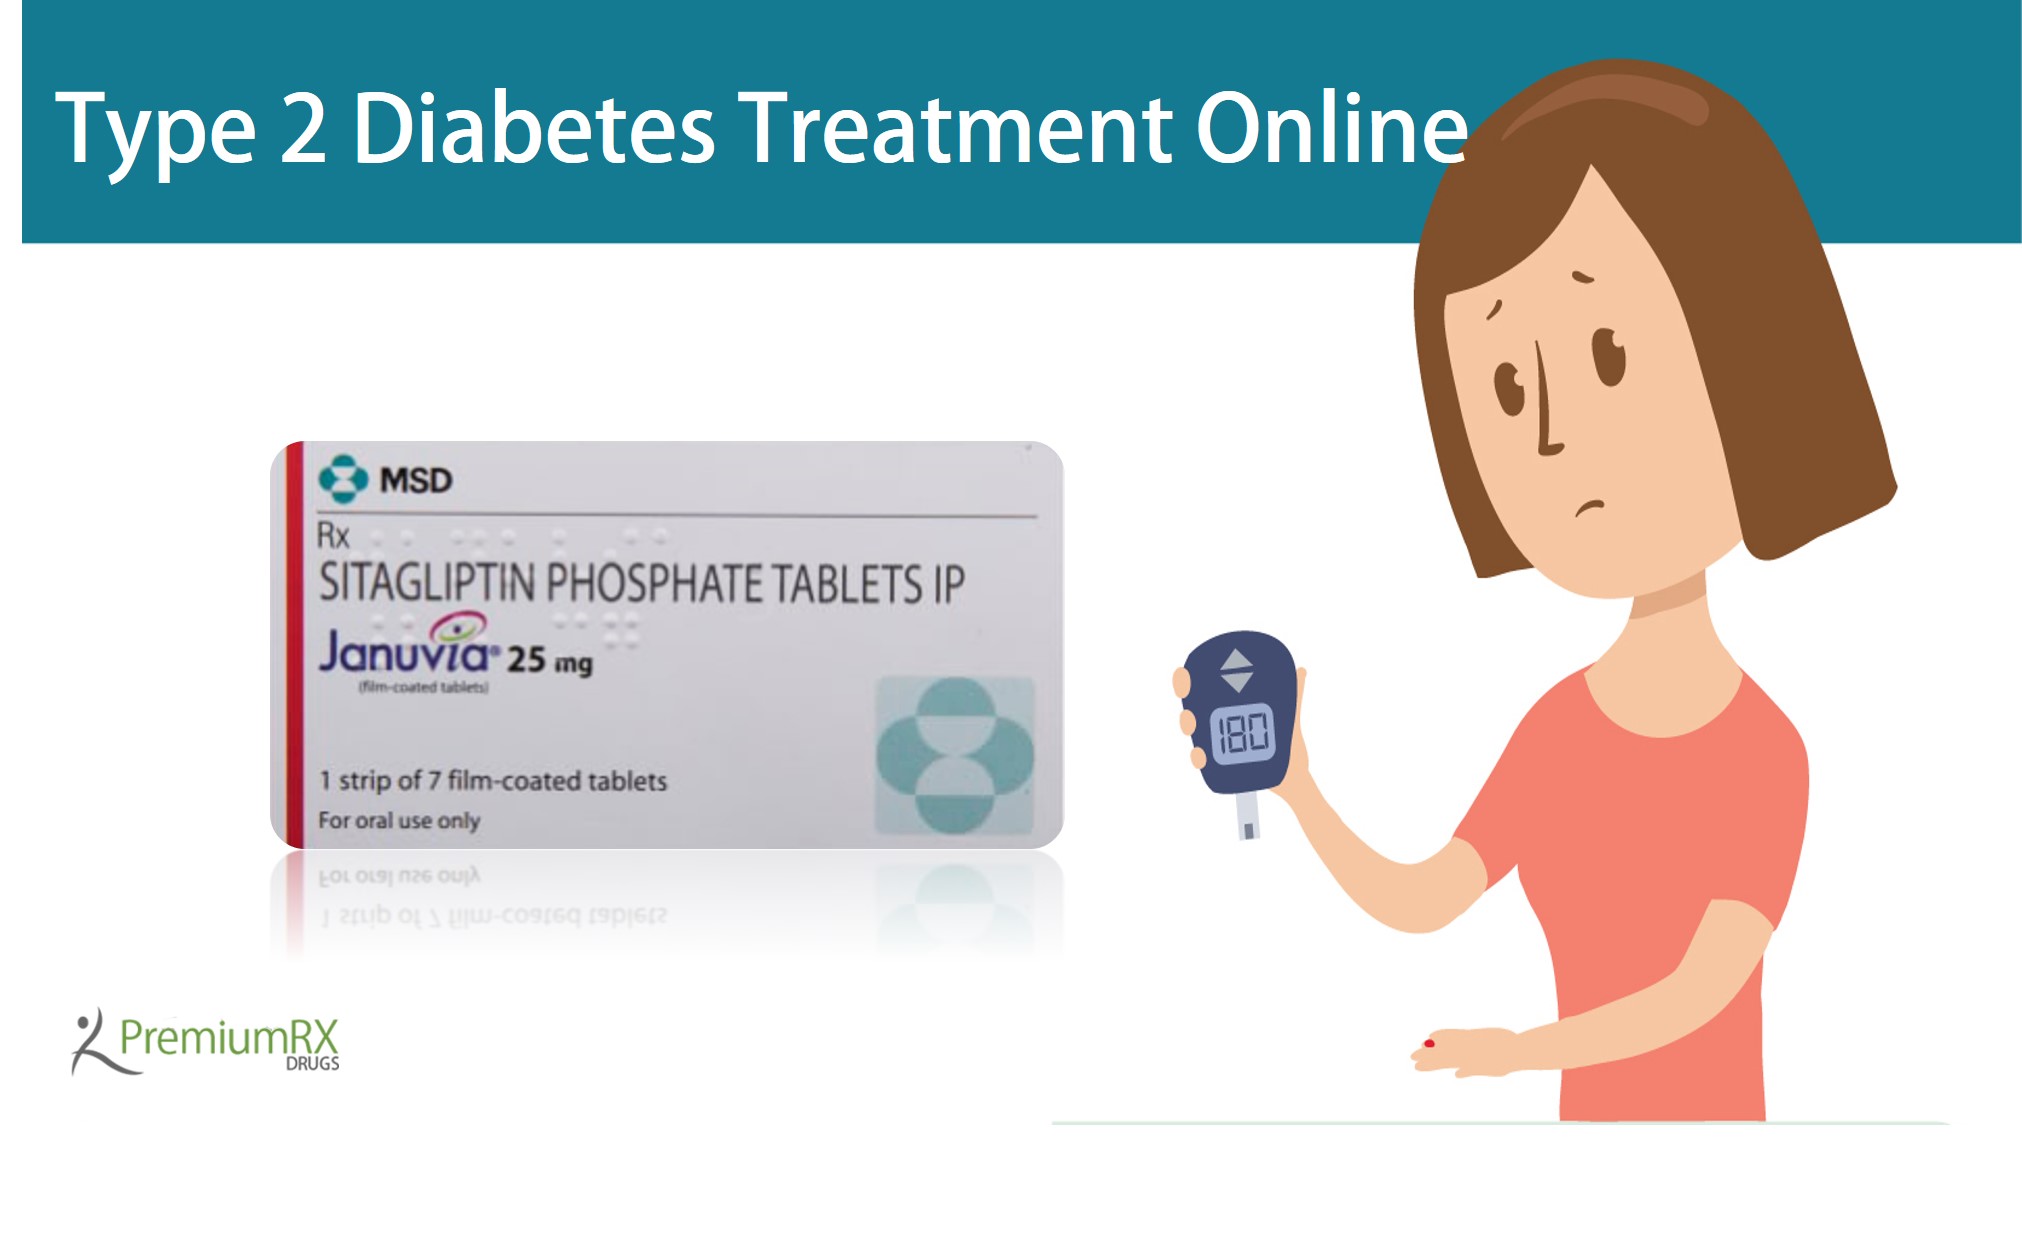 Type 2 Diabetes Treatment Online